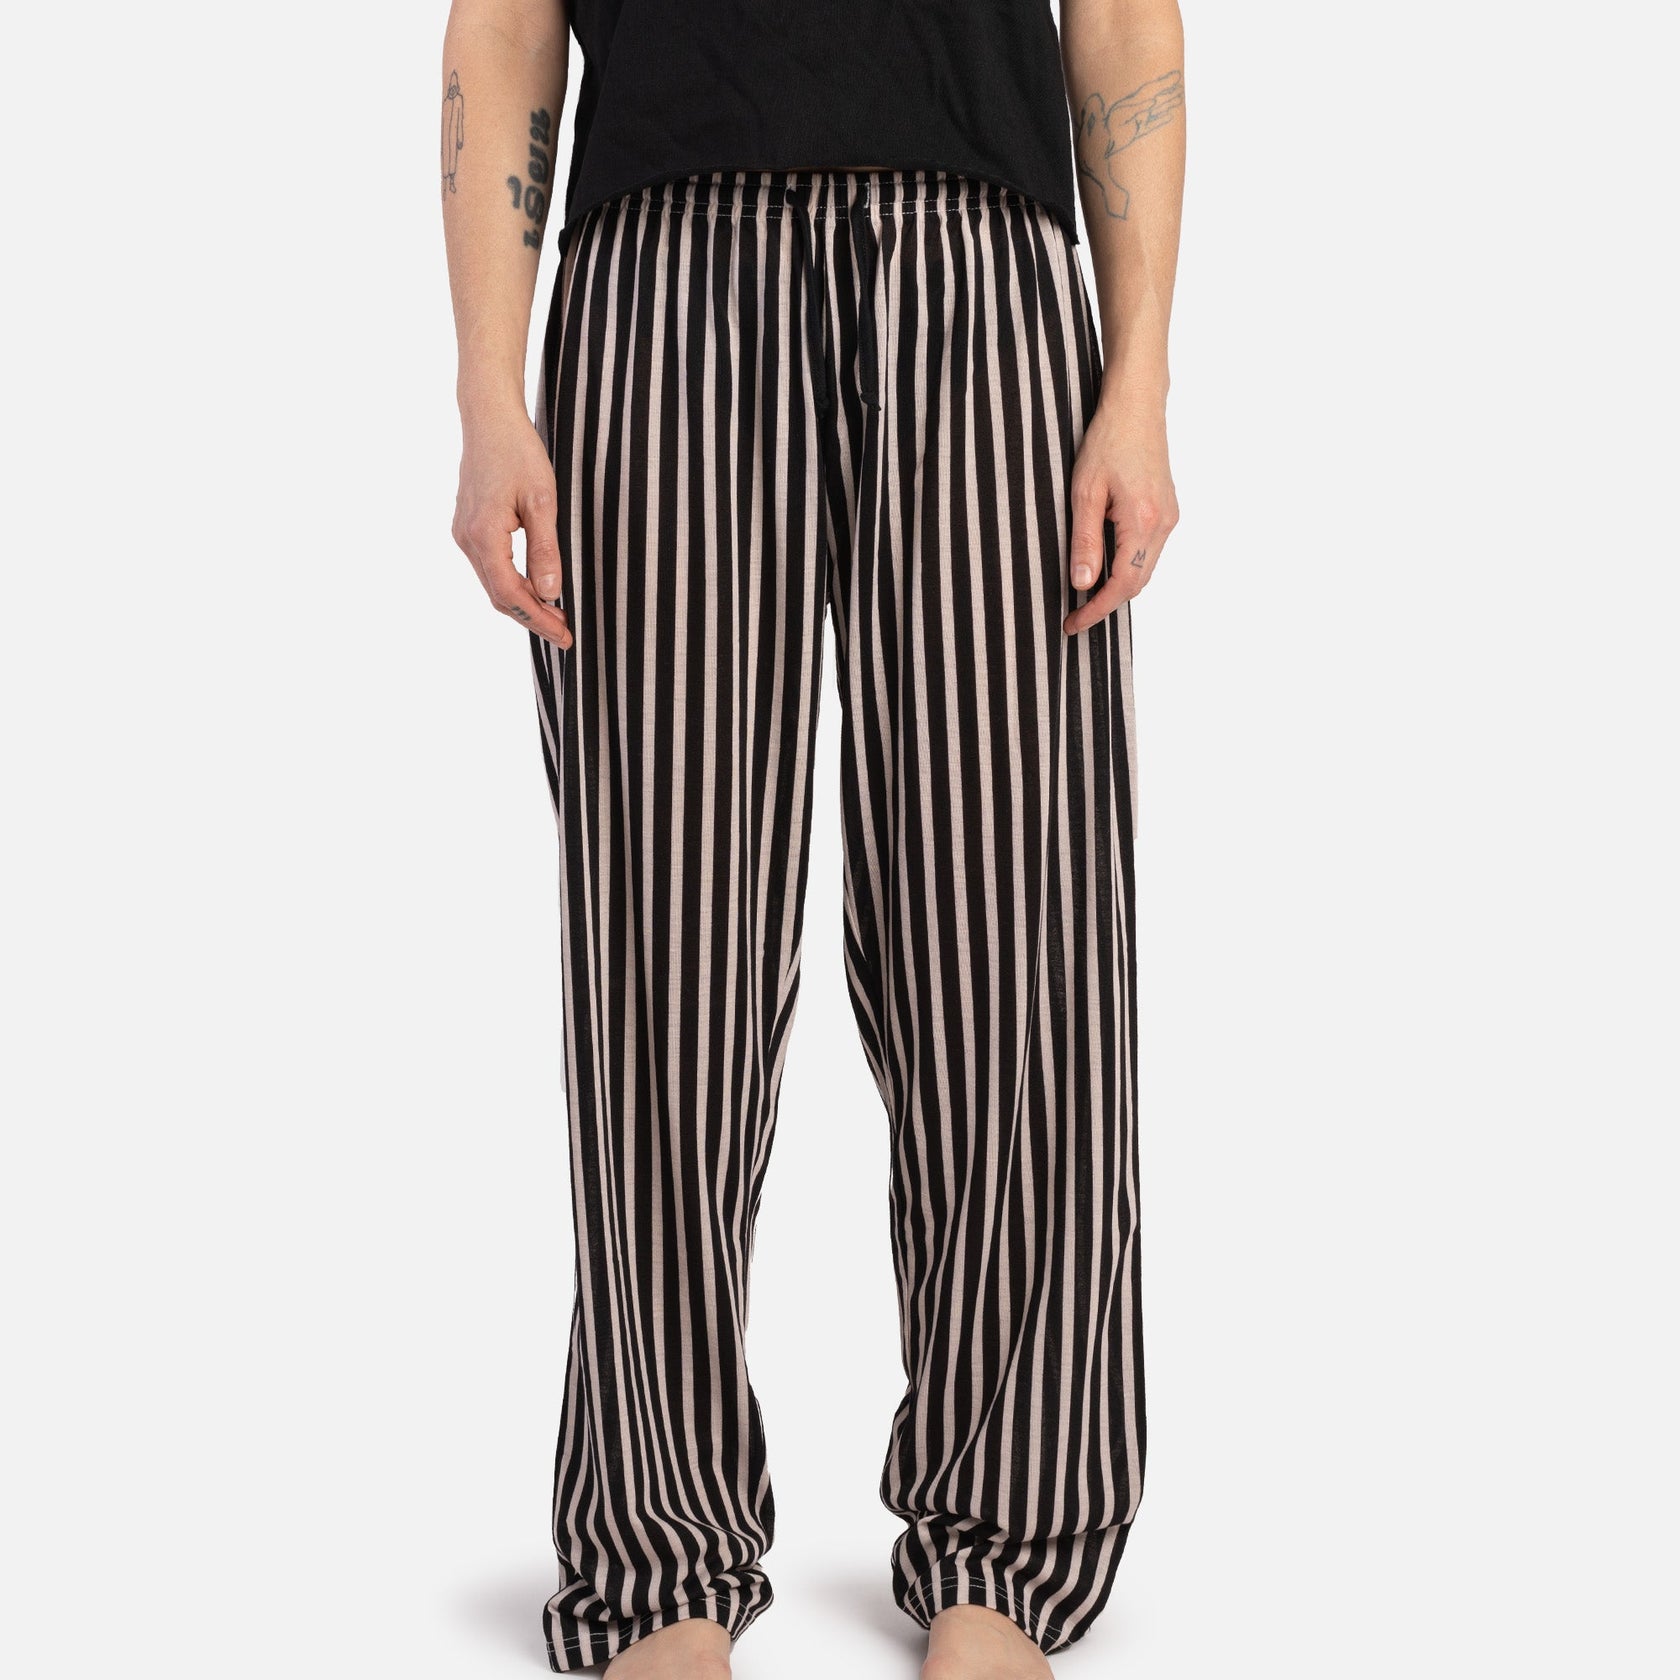 Matching Human & Dog Pajama - Stripe – Silver Paw